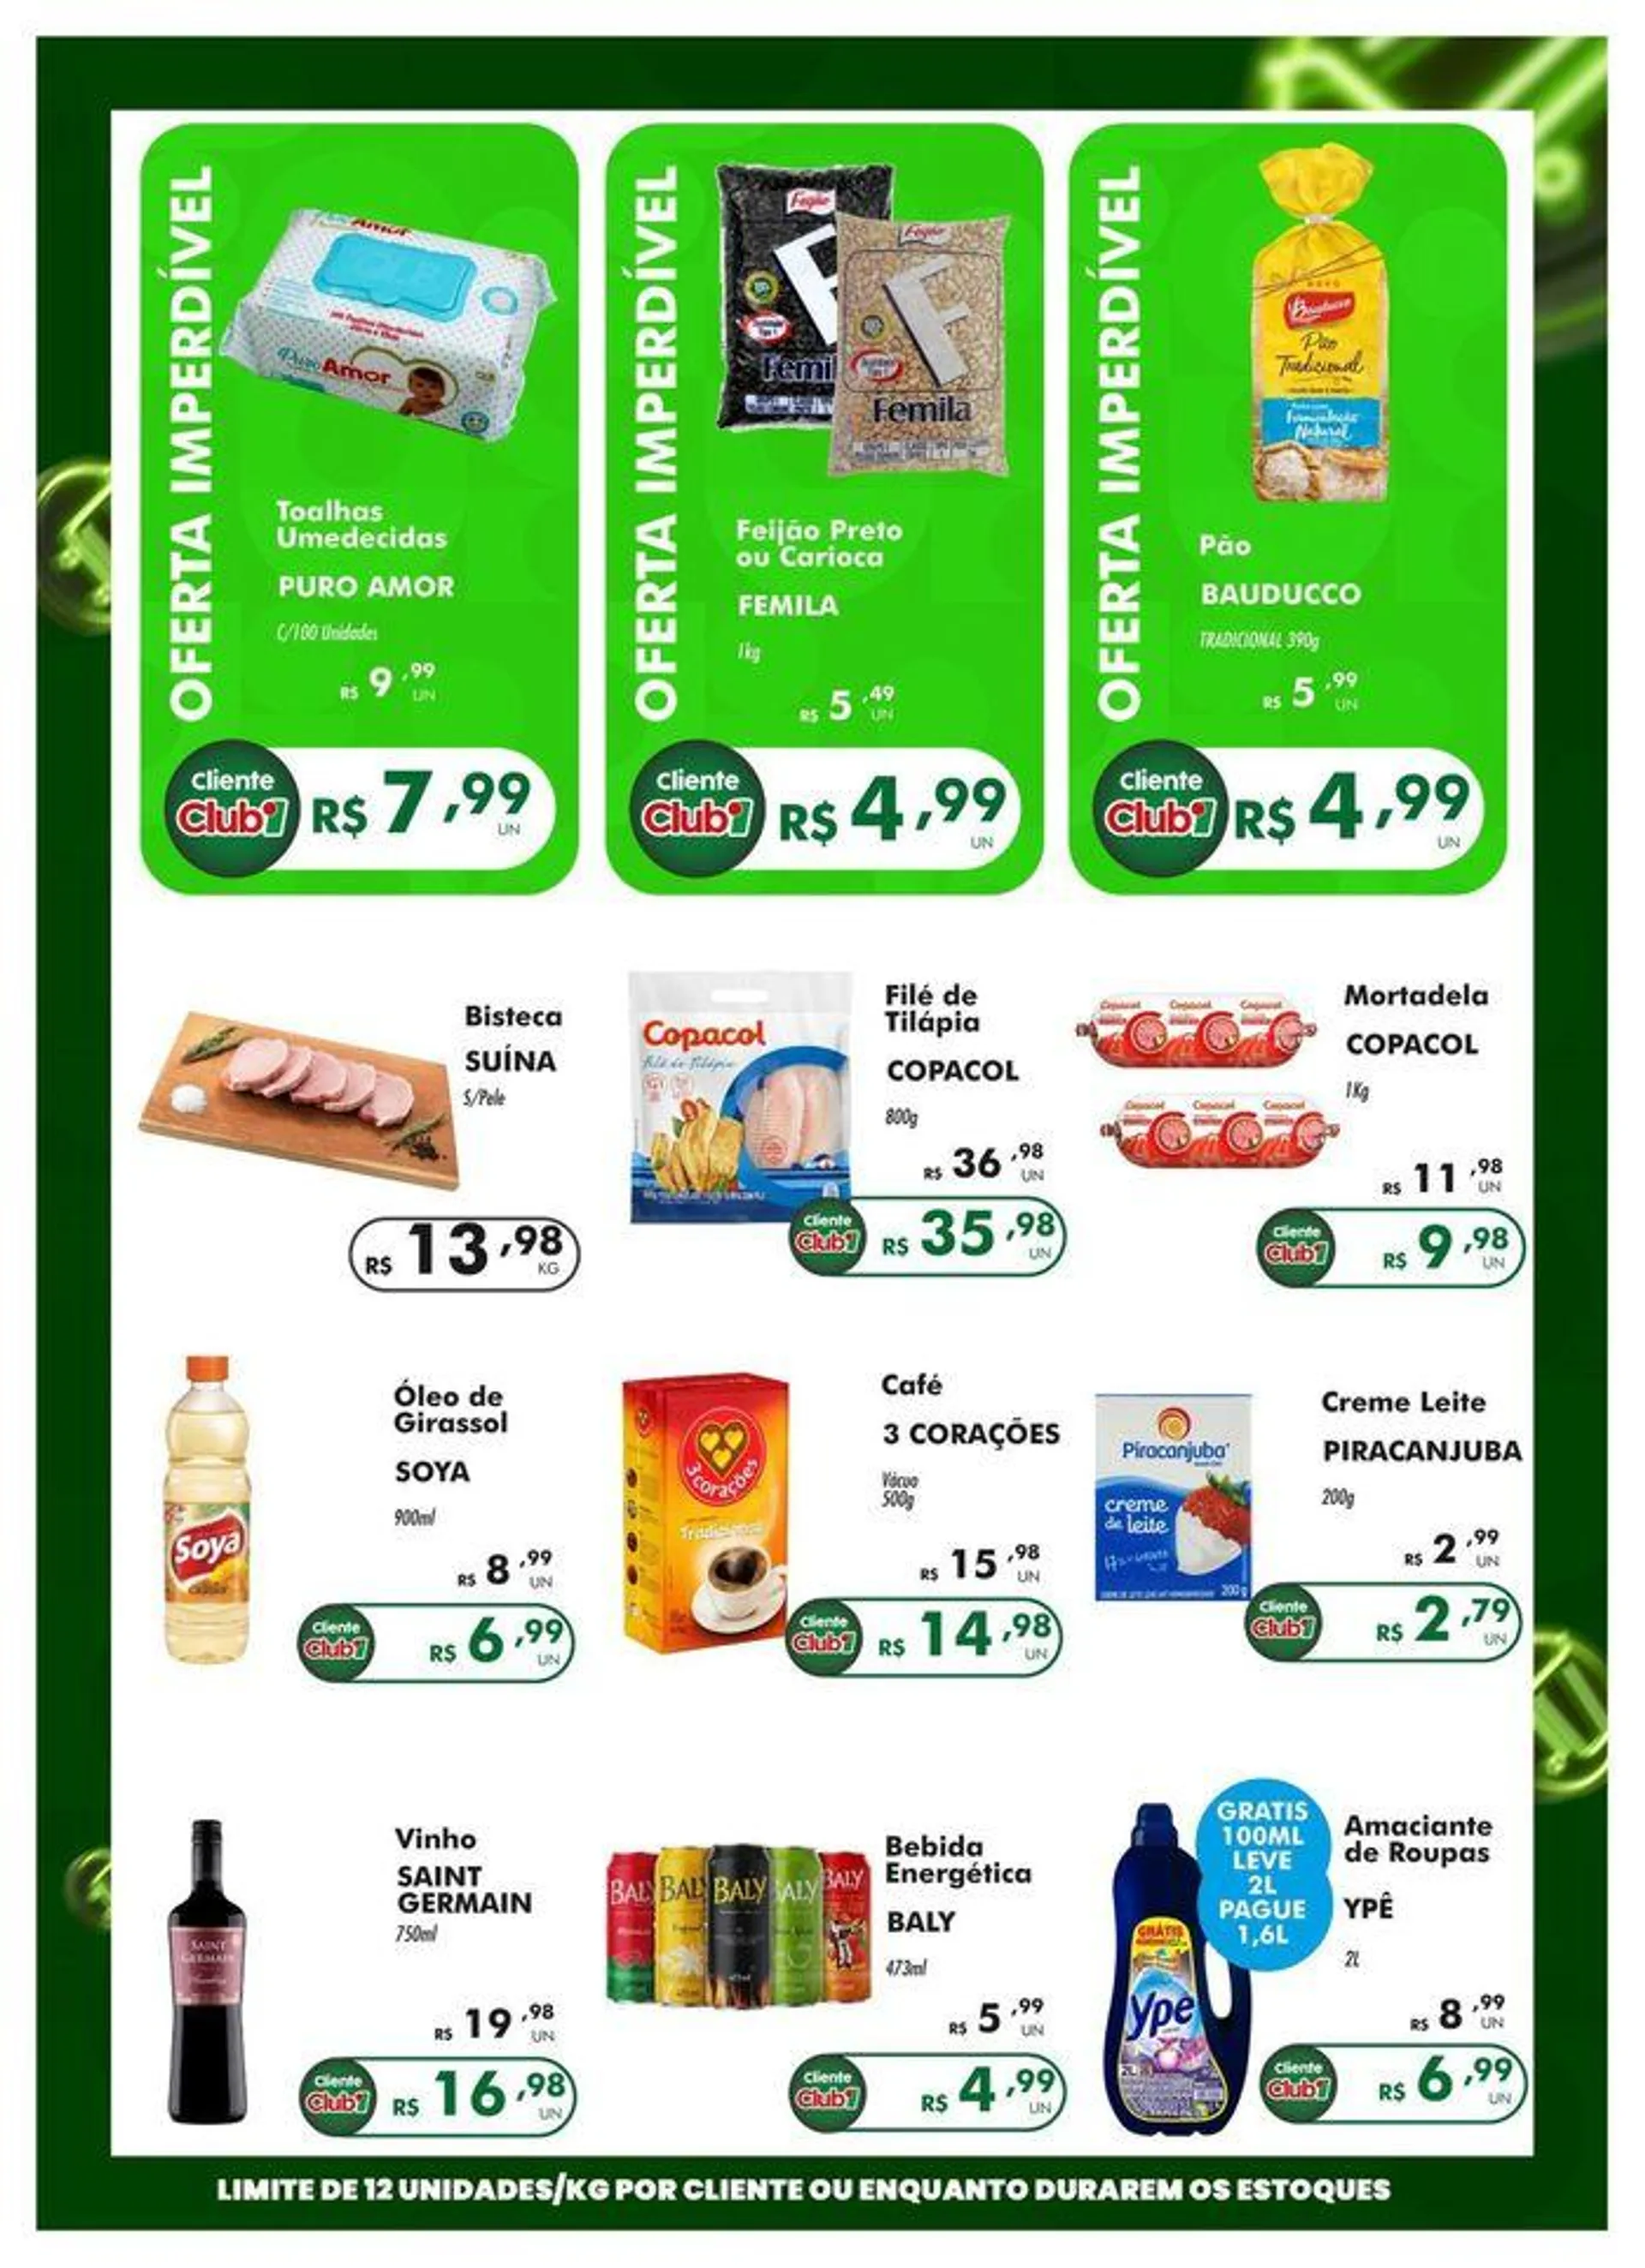 Ofertas Irani Supermercados - 1